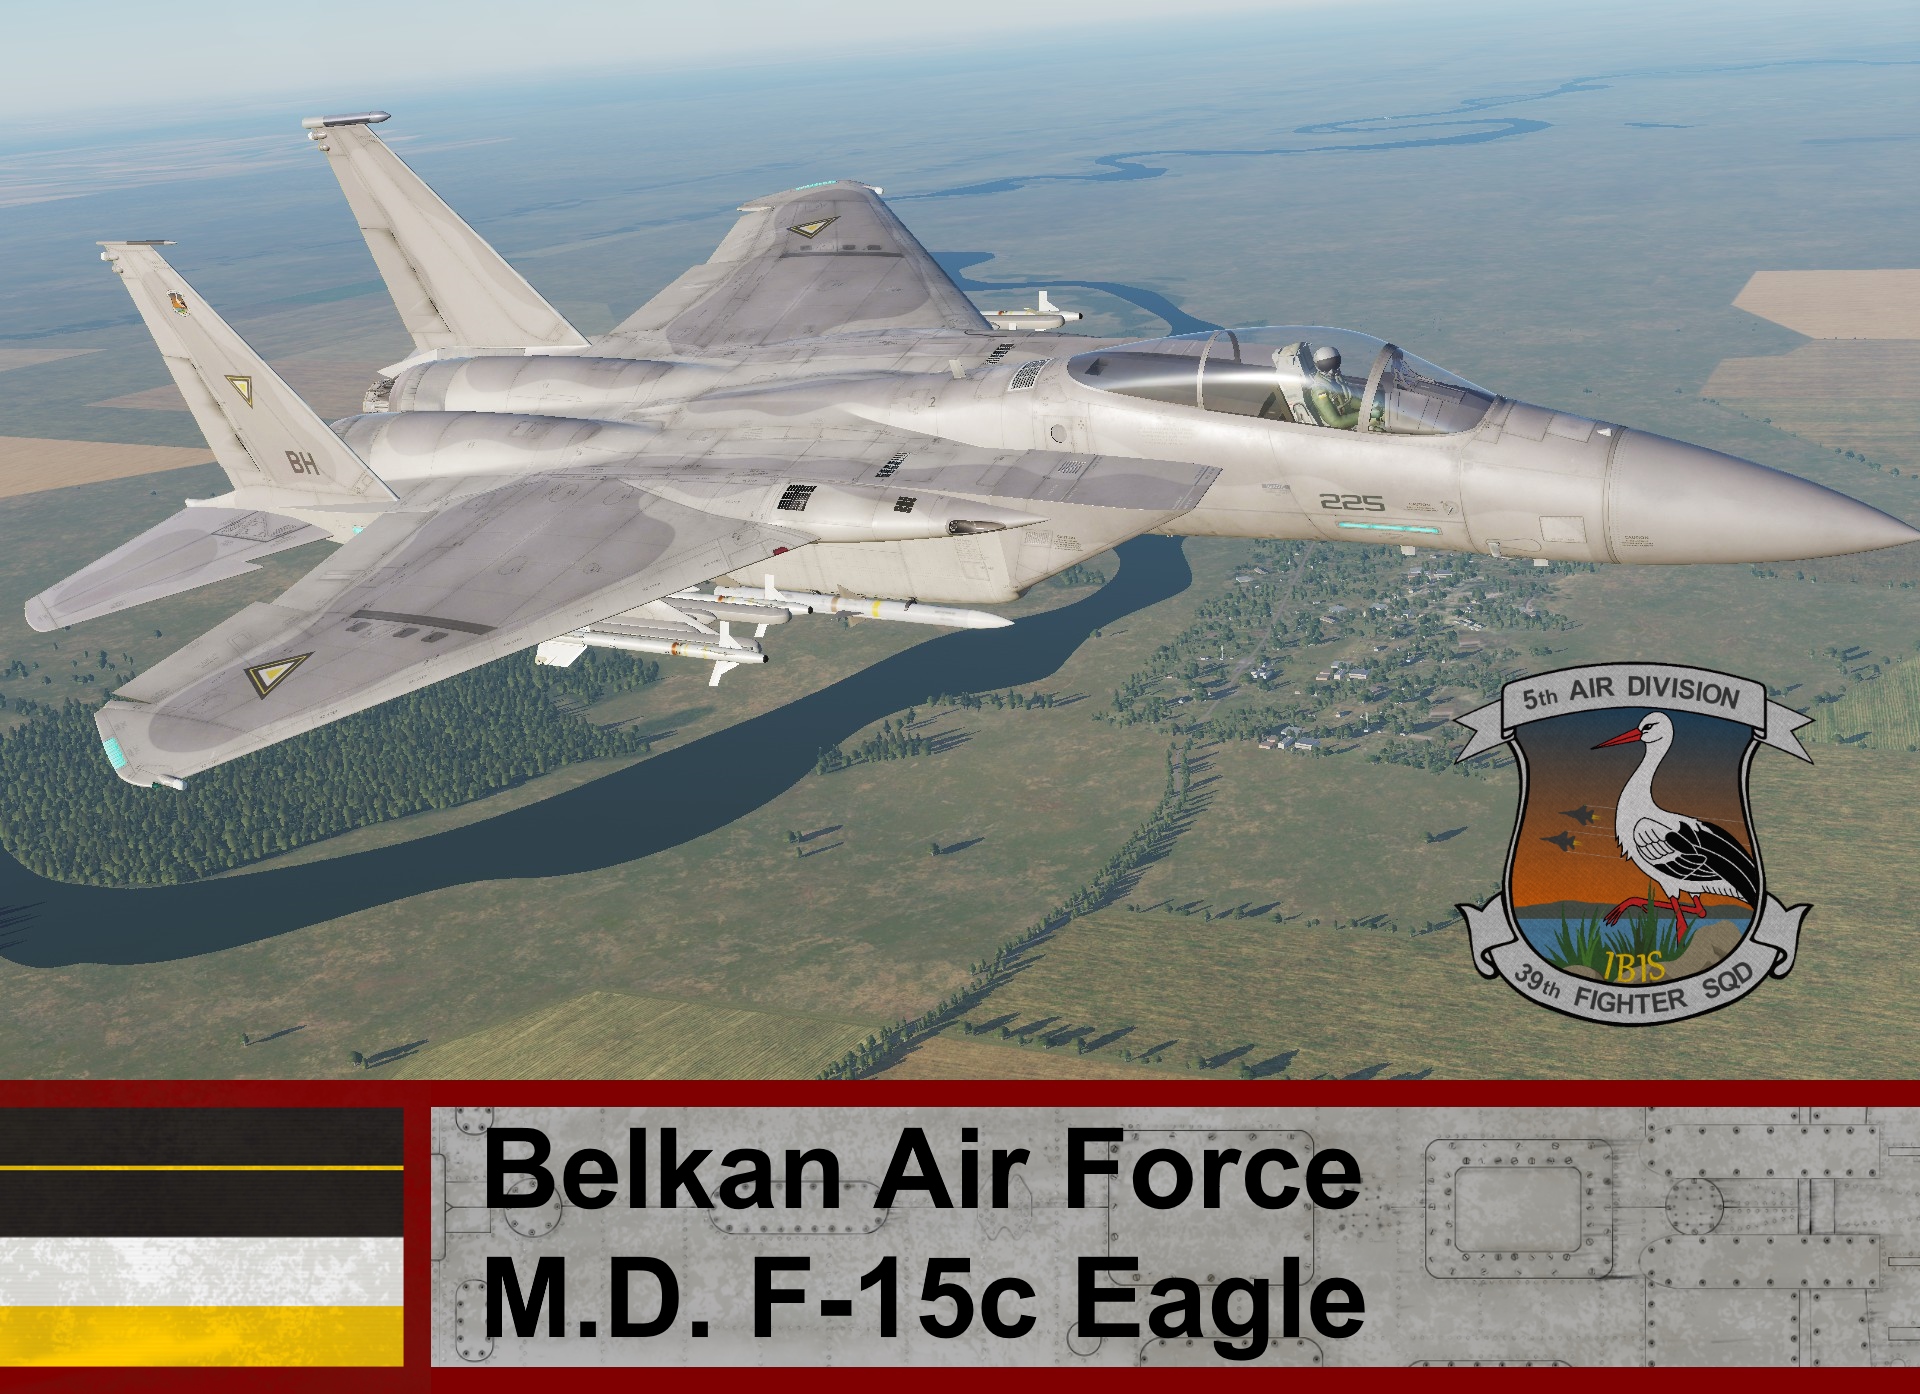 Belkan Air Force F-15c Eagle - Ace Combat Zero  (39th TFS) Cpt David Hartmann